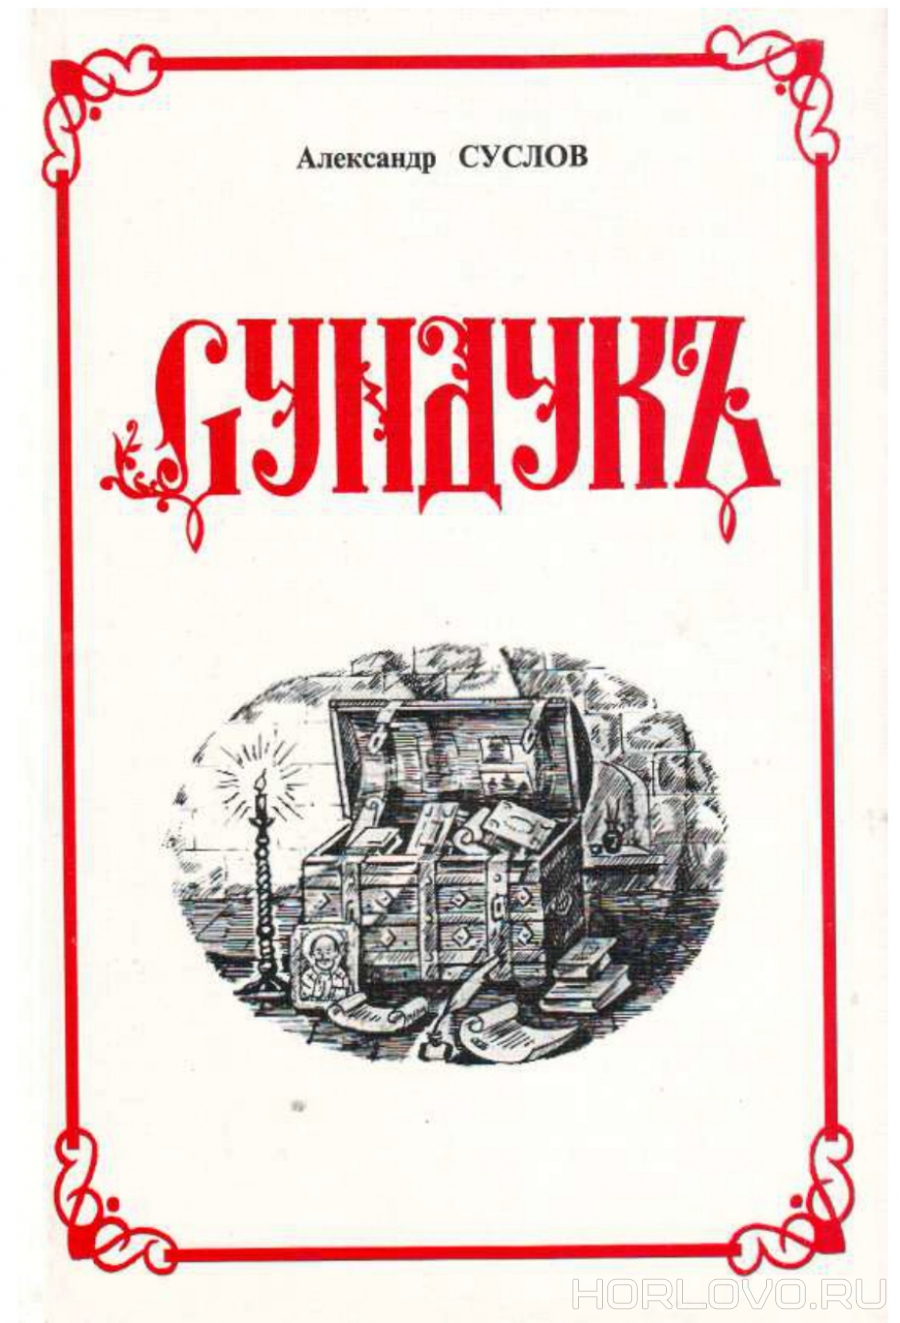 Книга стихотворений Александра Суслова «Сундукъ» на литературном сайте